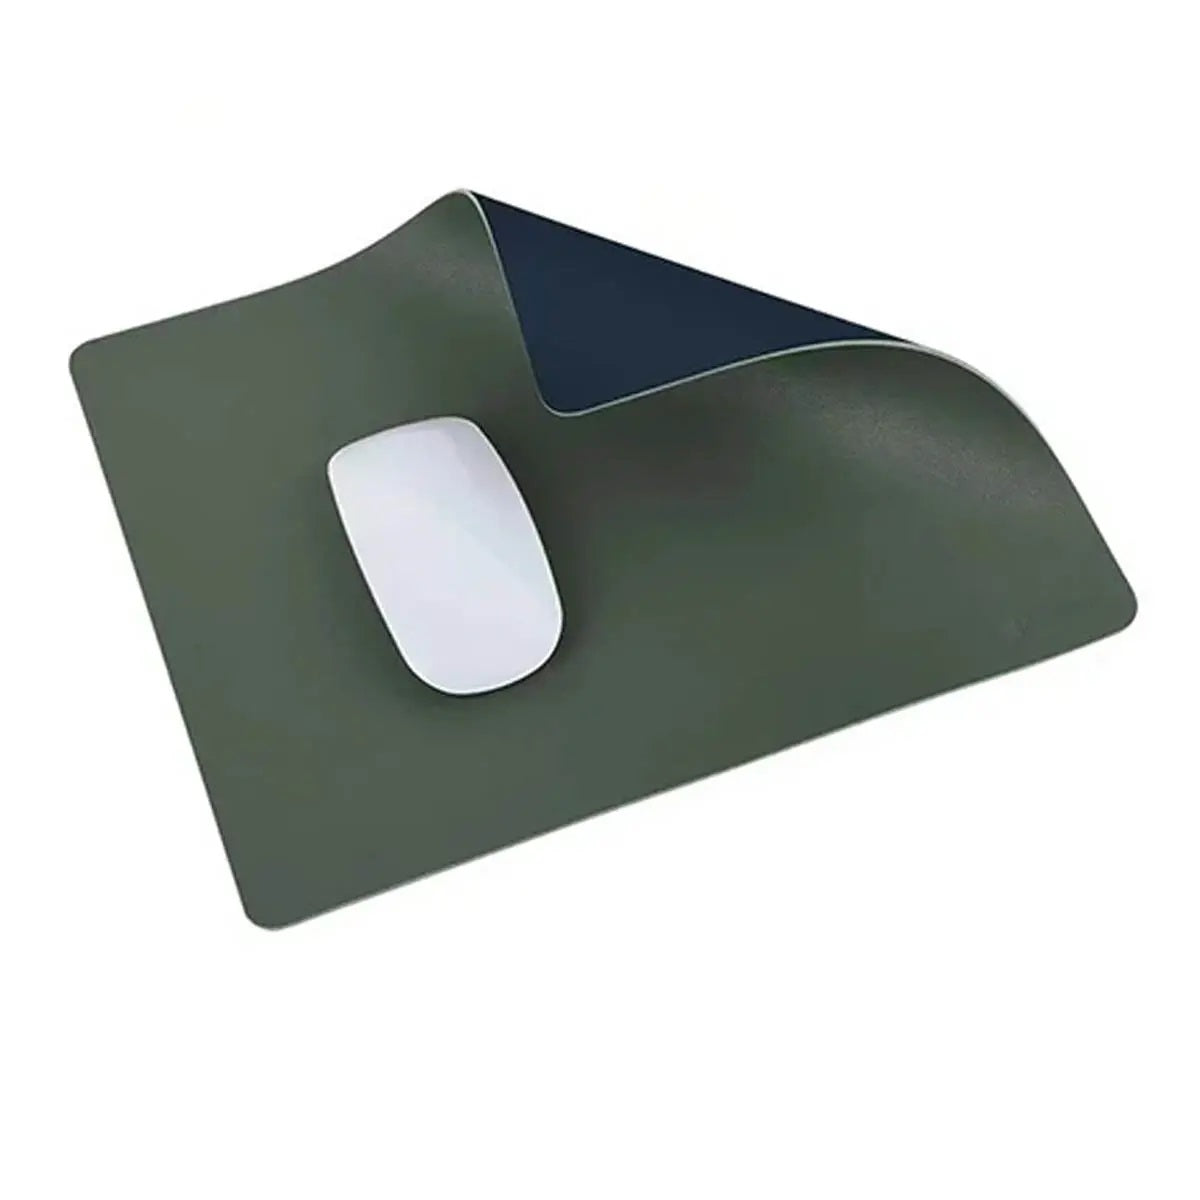 COTECi Double-Sided Desk Pad 80*40cm